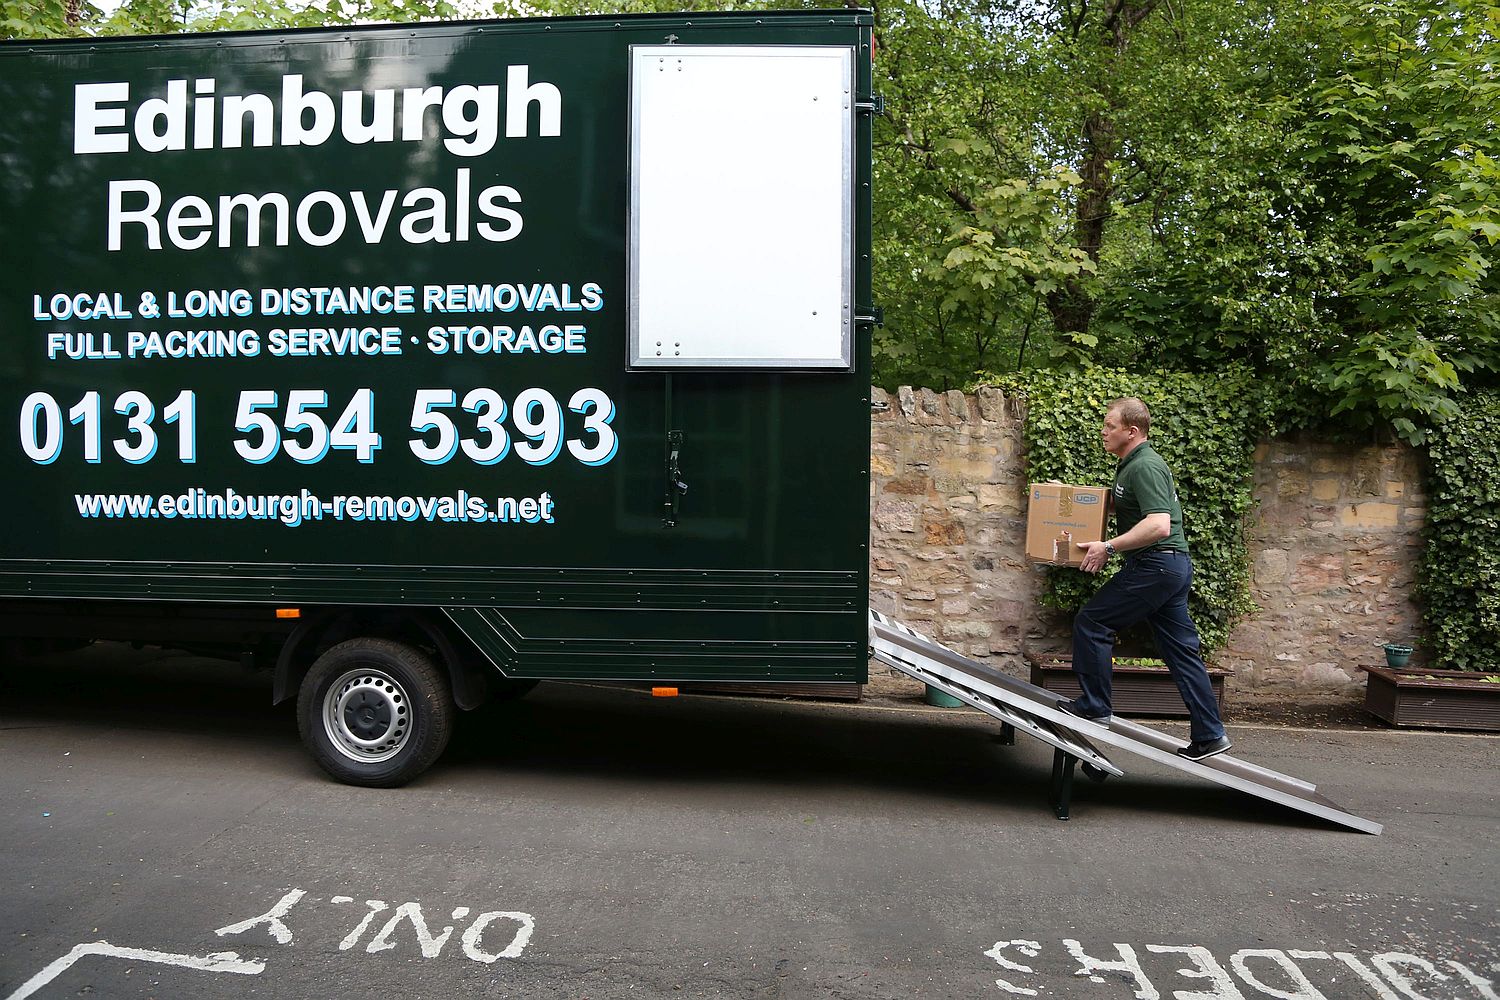 Edinburgh Removals Ltd